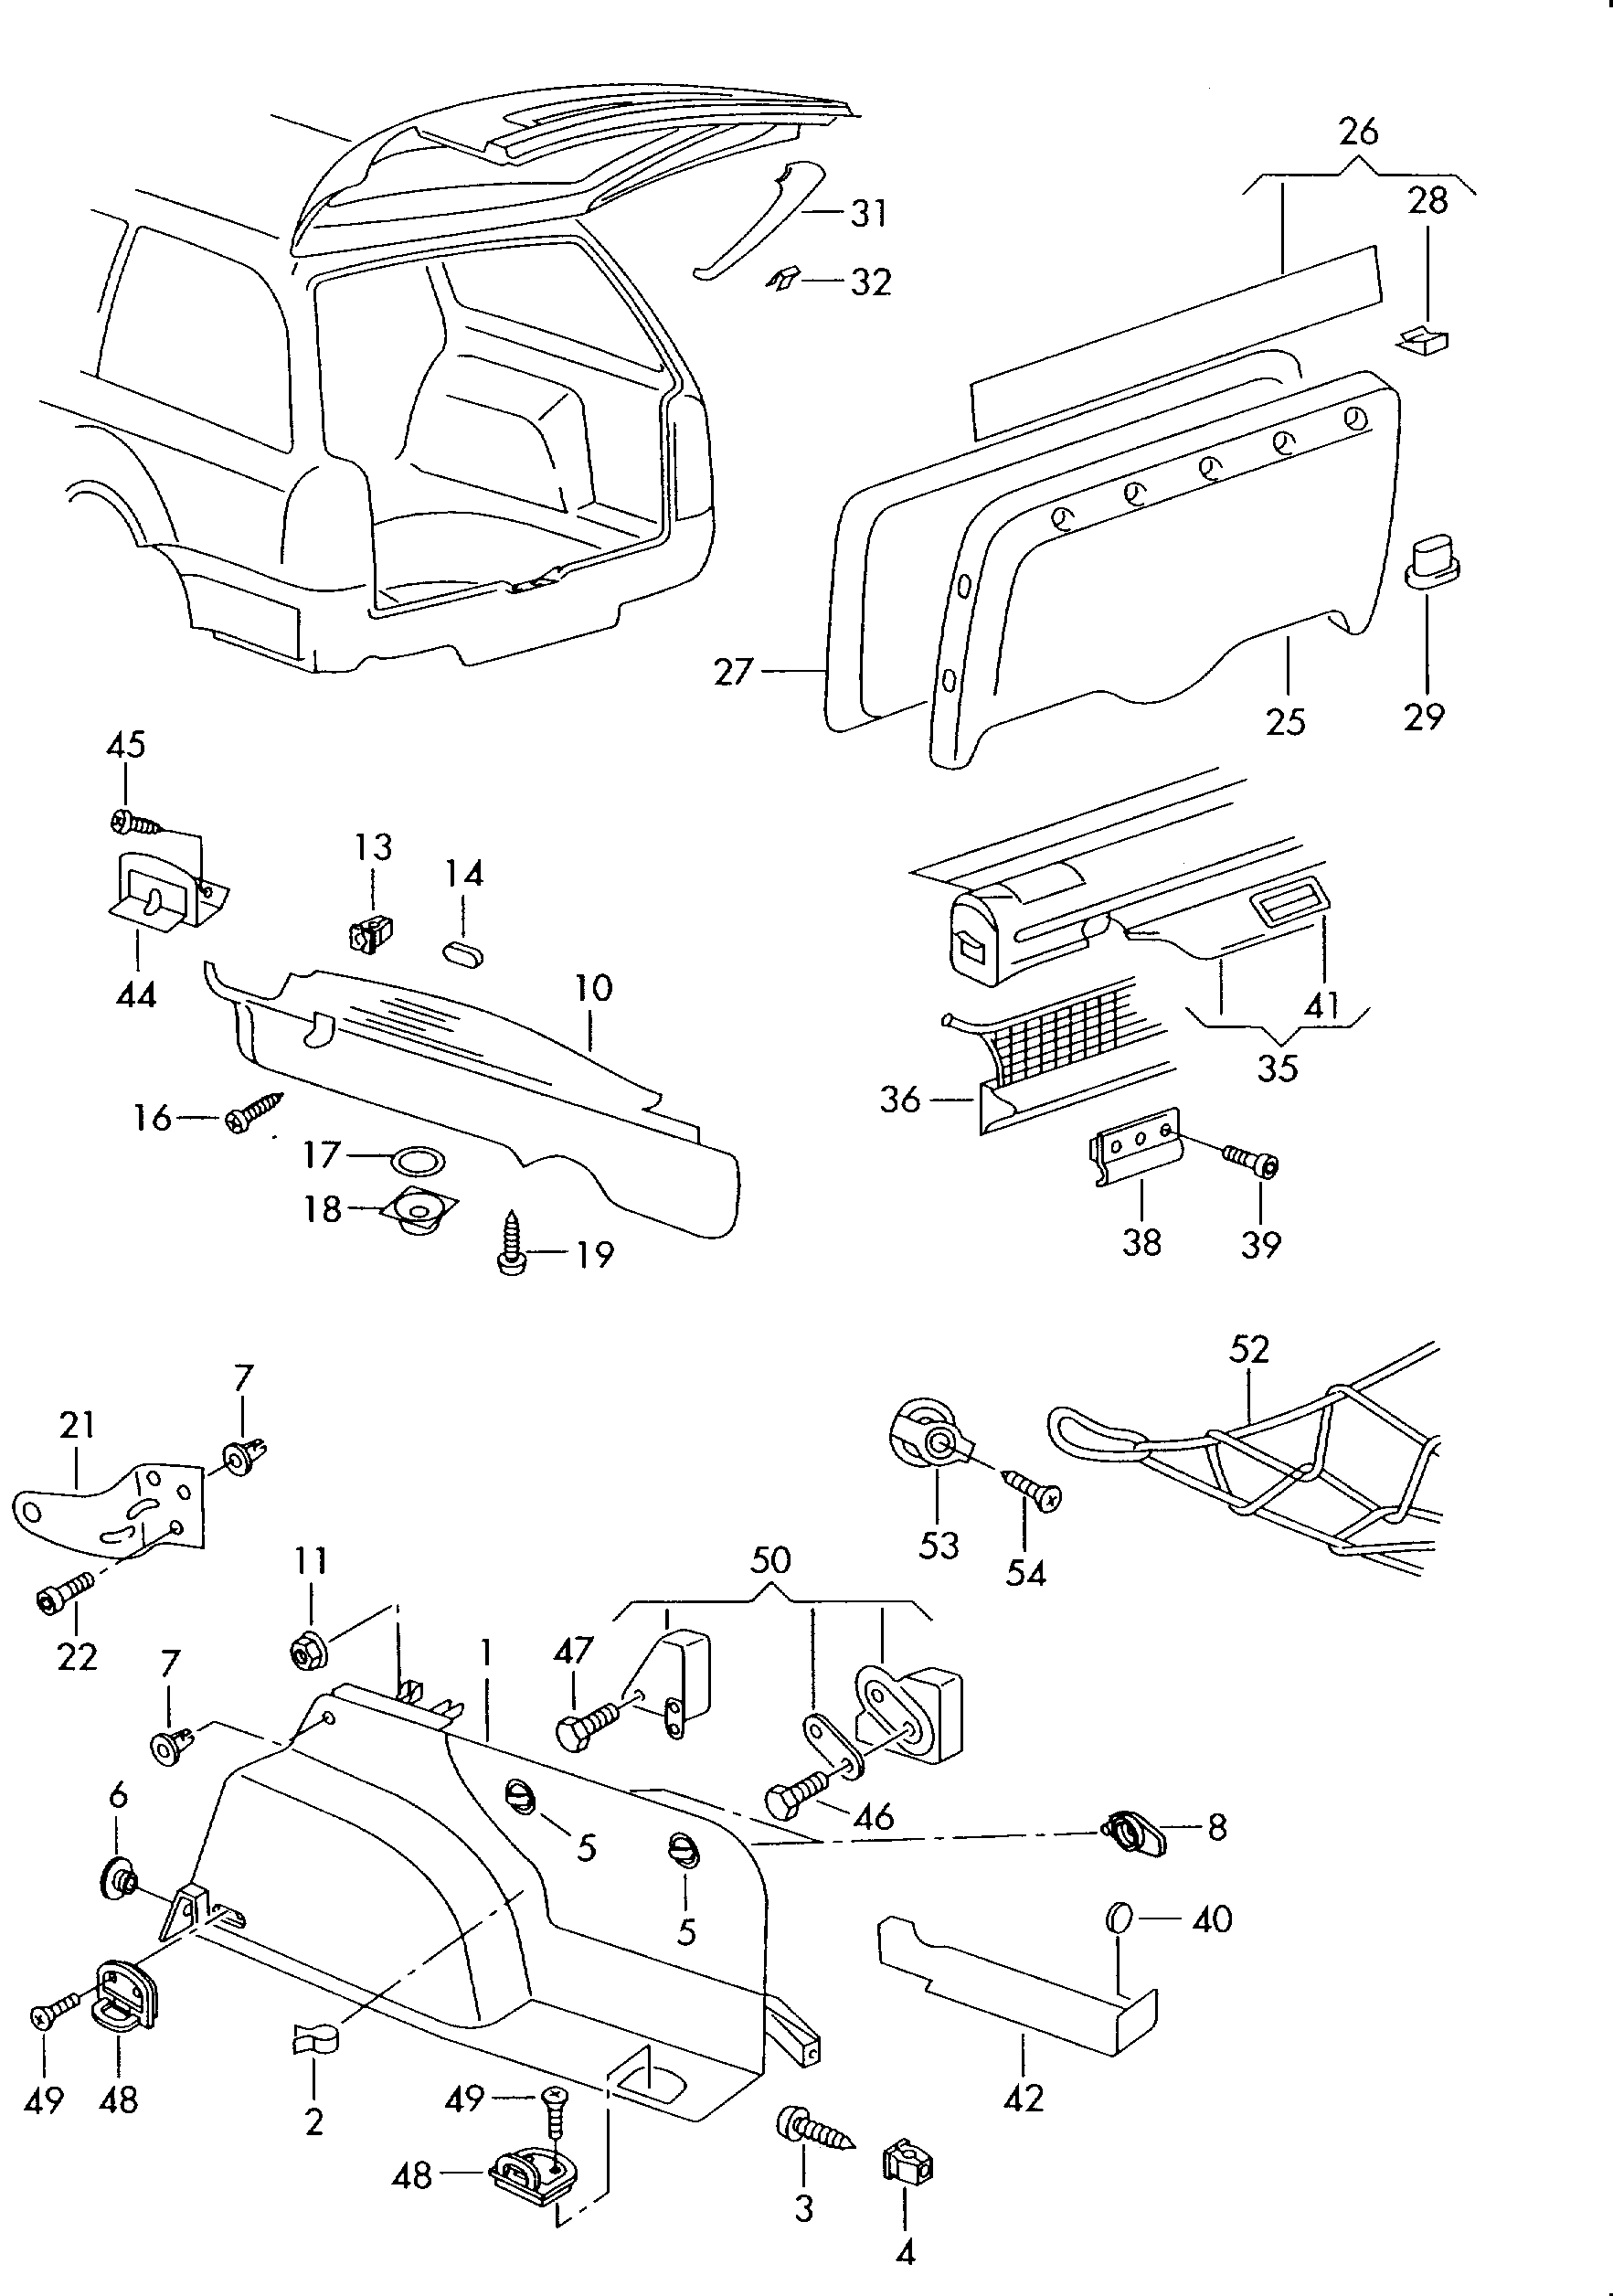 moqueta del maleteroCubierta de la zona de cargaguarnecido de porton posterior lateral - Octavia - oct